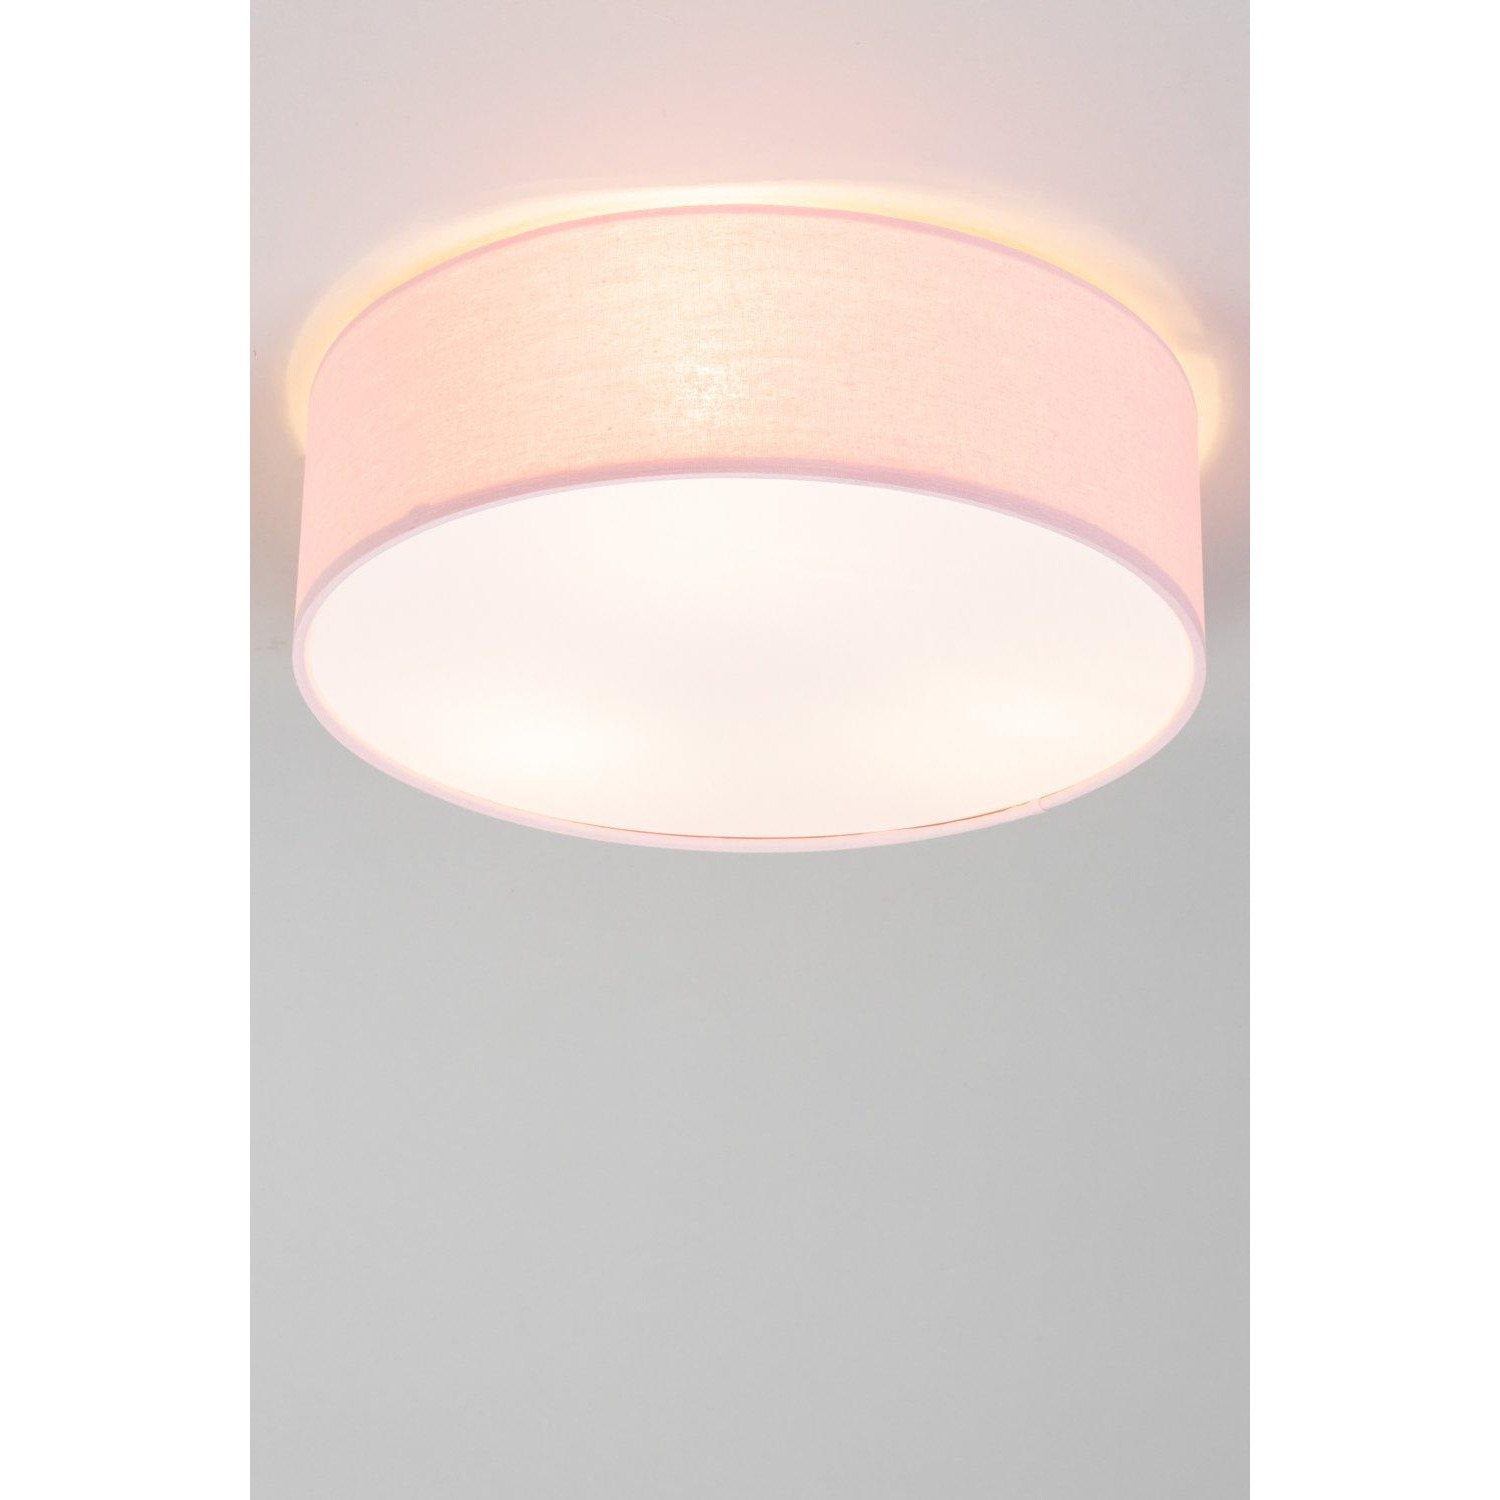 Glow Flush Ceiling Light - image 1